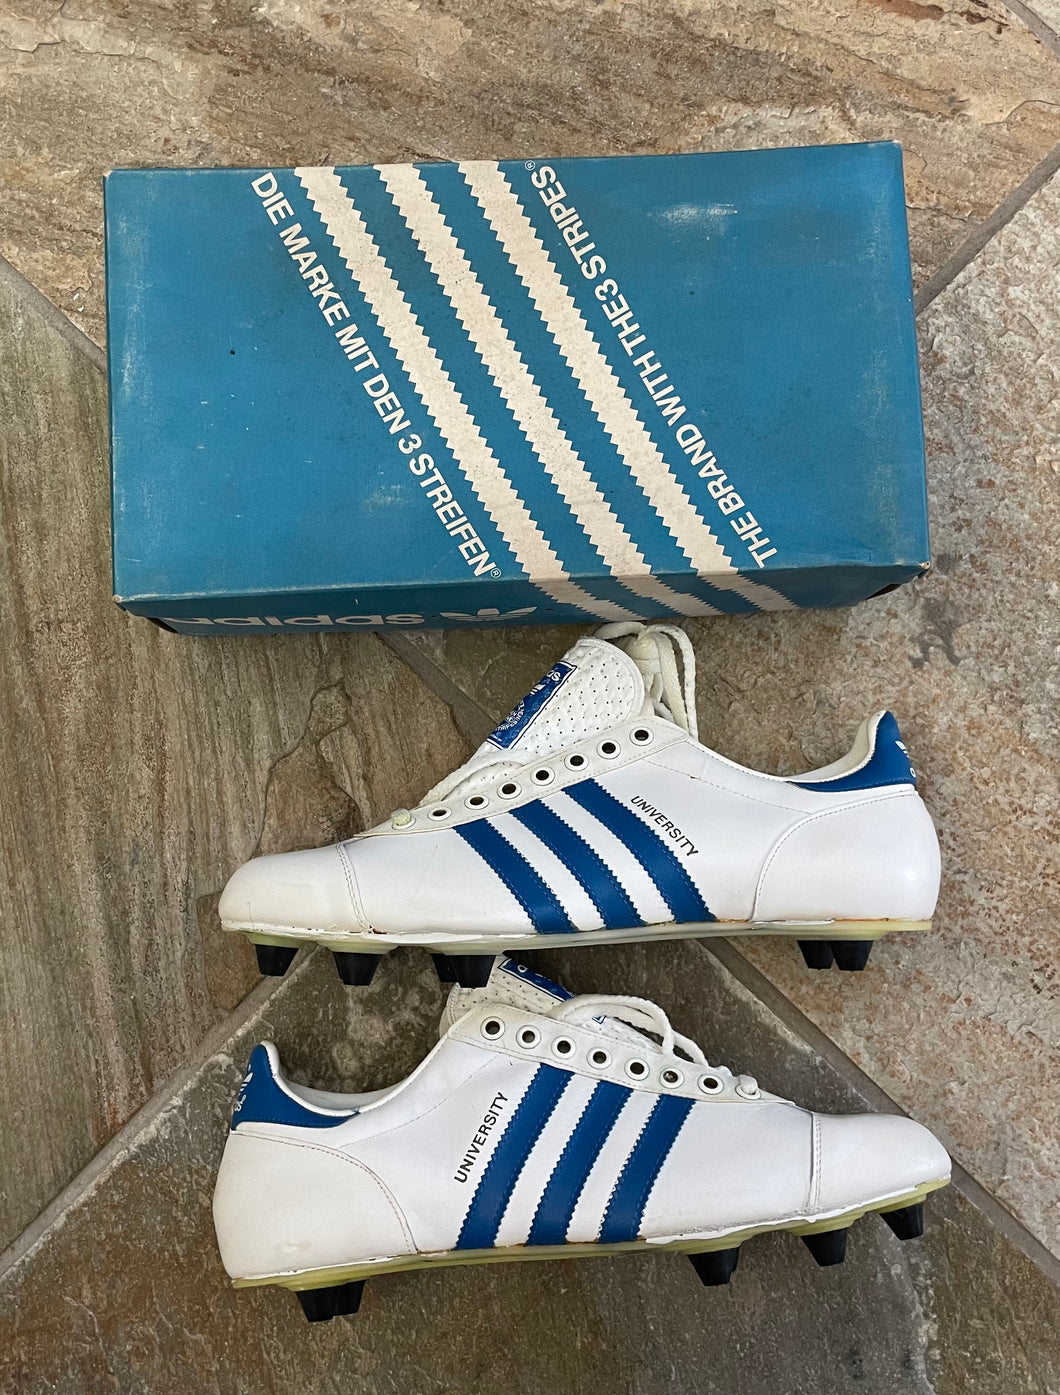 Vintage Adidas University Soccer Cleats Shoes, Size 9 ###